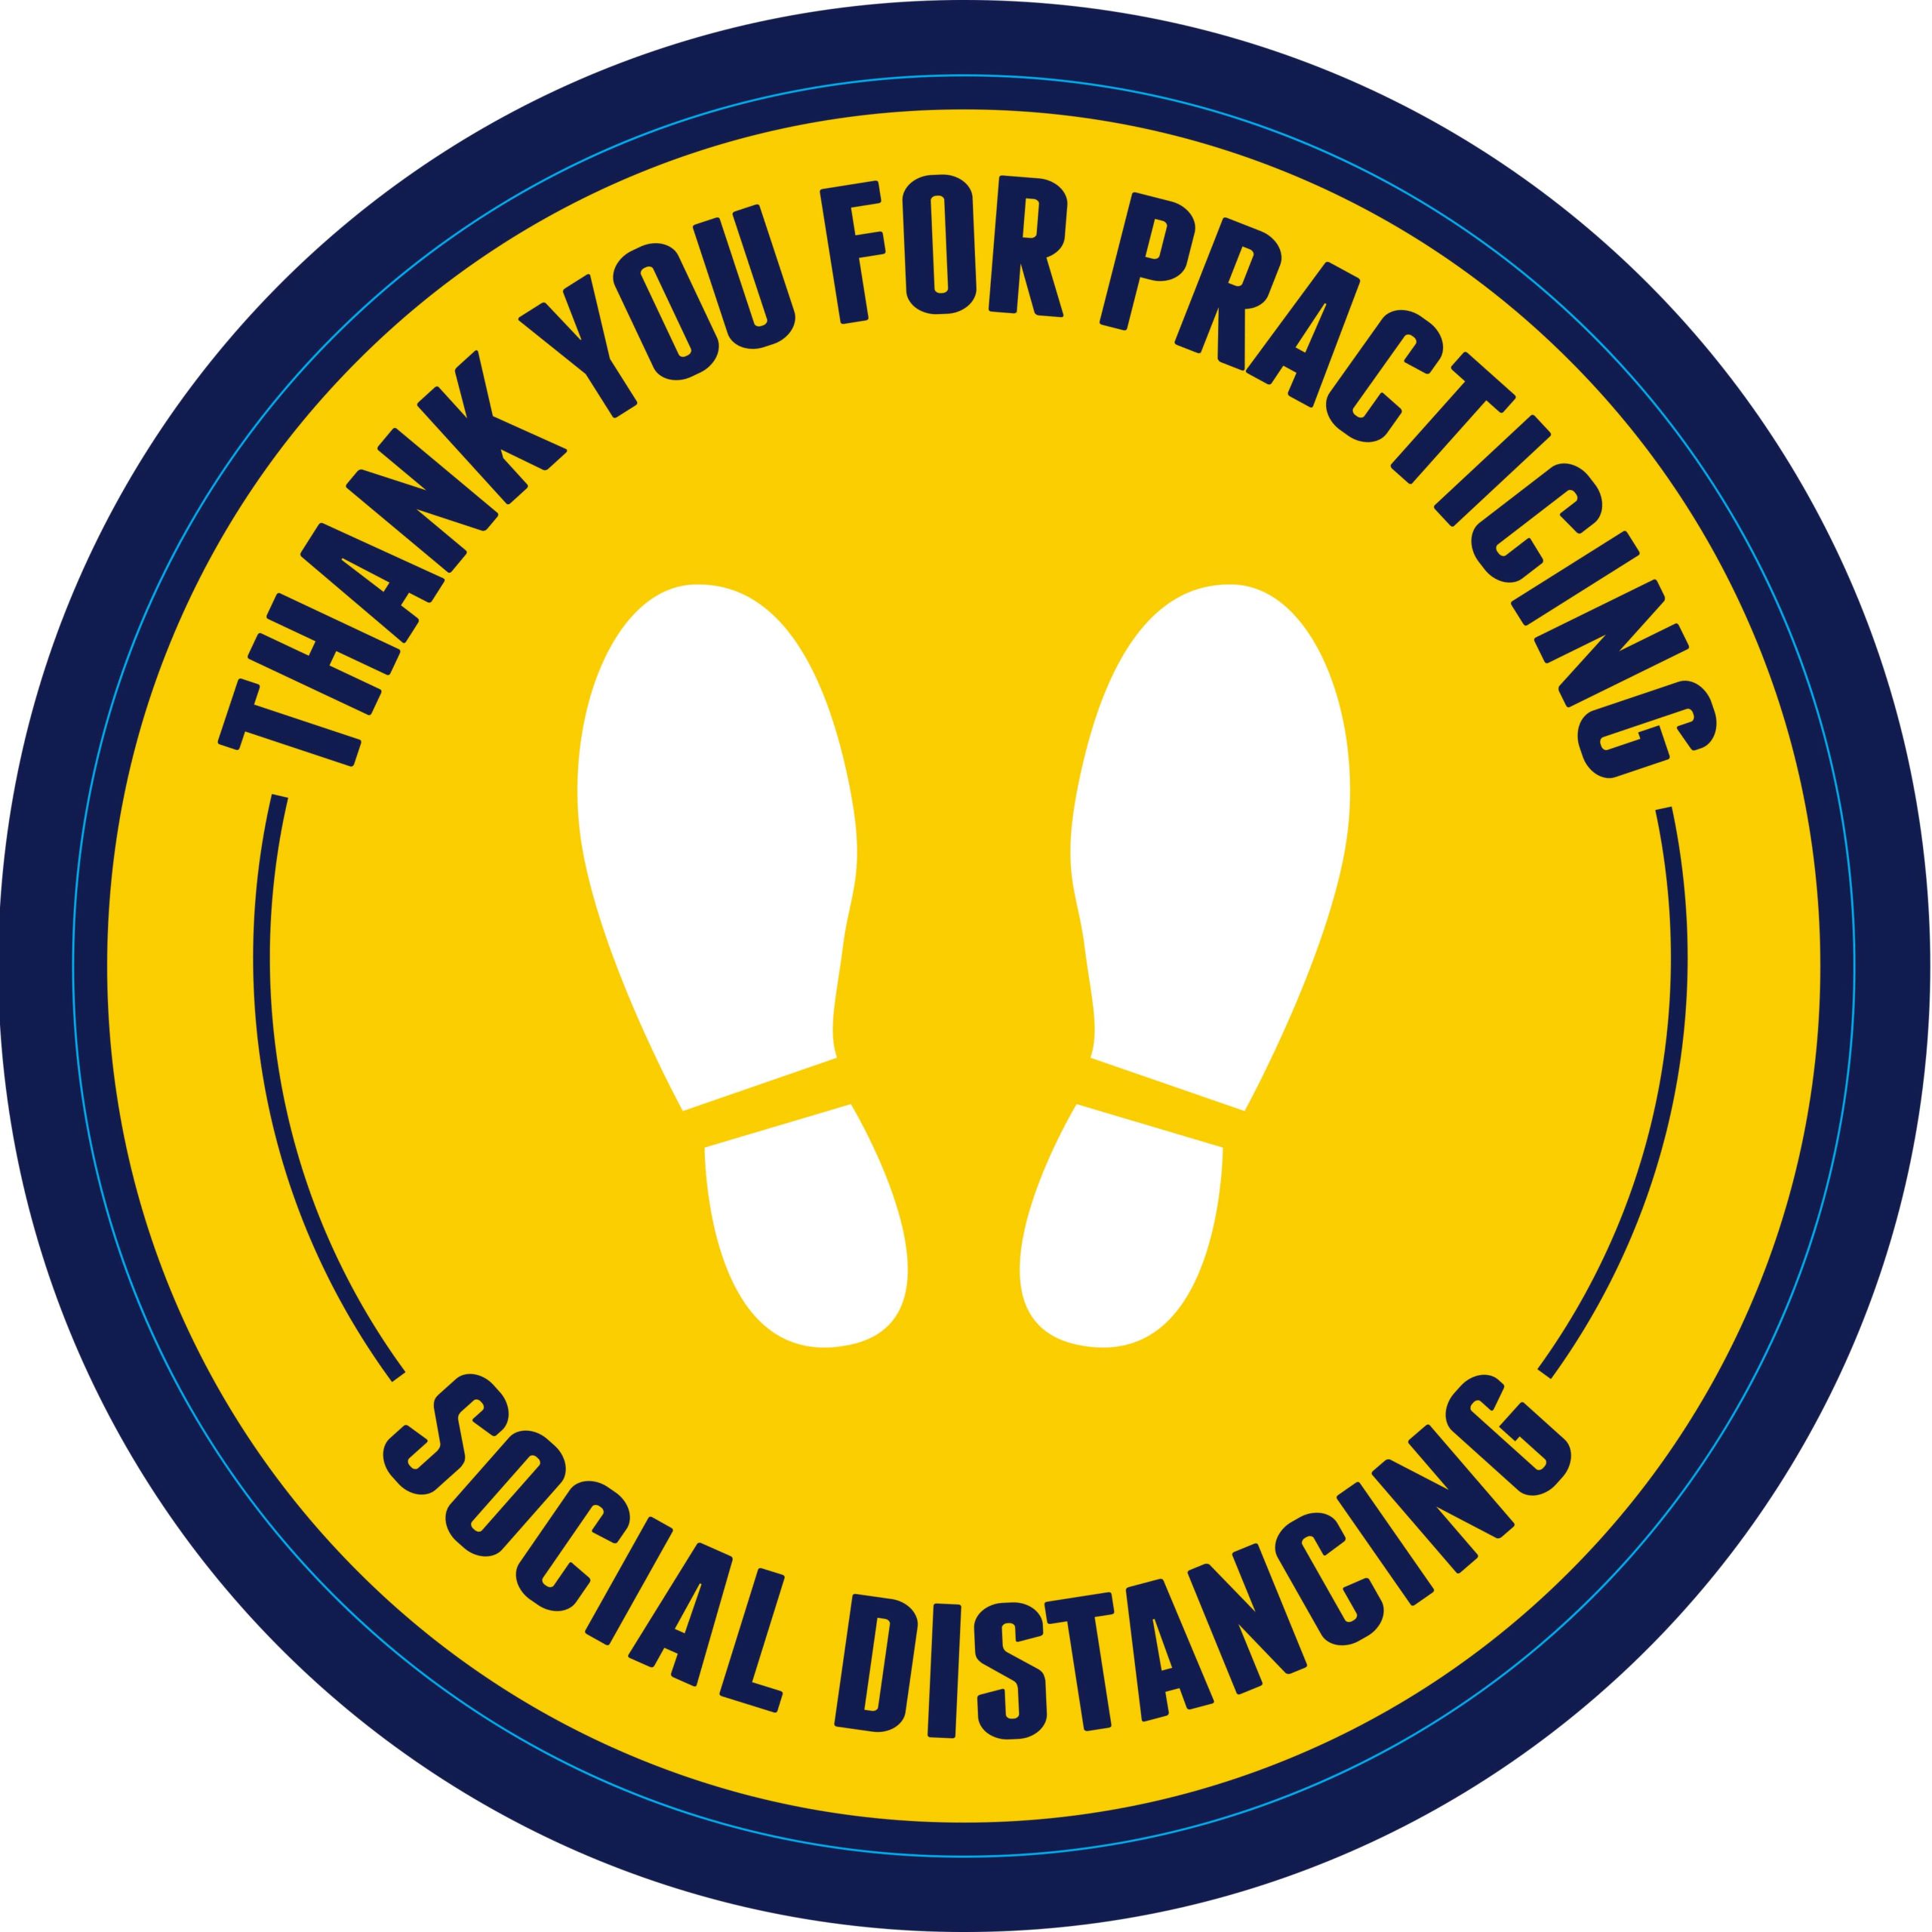 SOA - Social Distancing Floor 12" Diameter - YELLOW - 4 pack